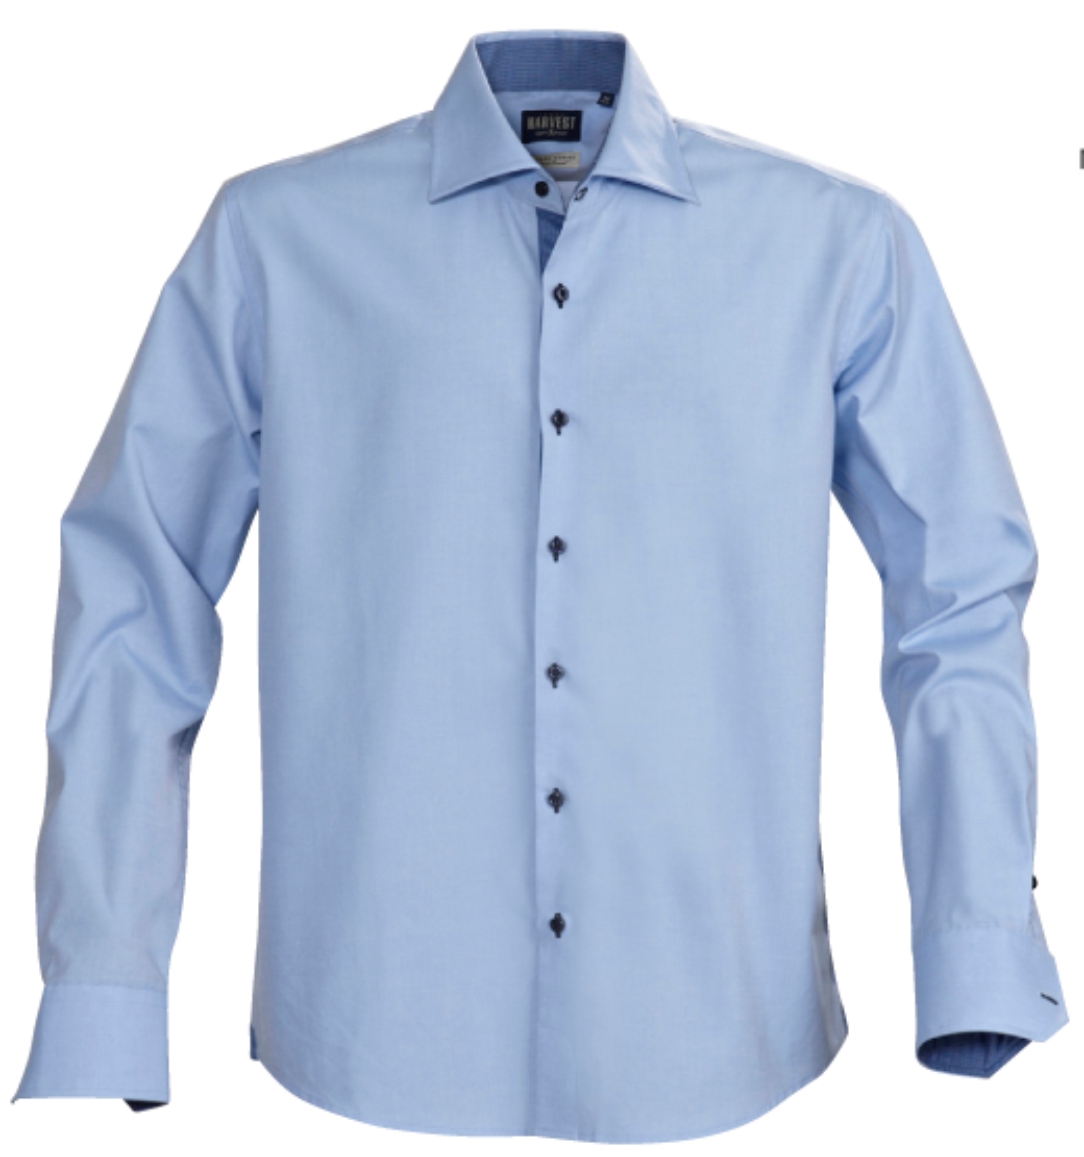 James Harvest Baltimore-Mens high quality cotton shirt